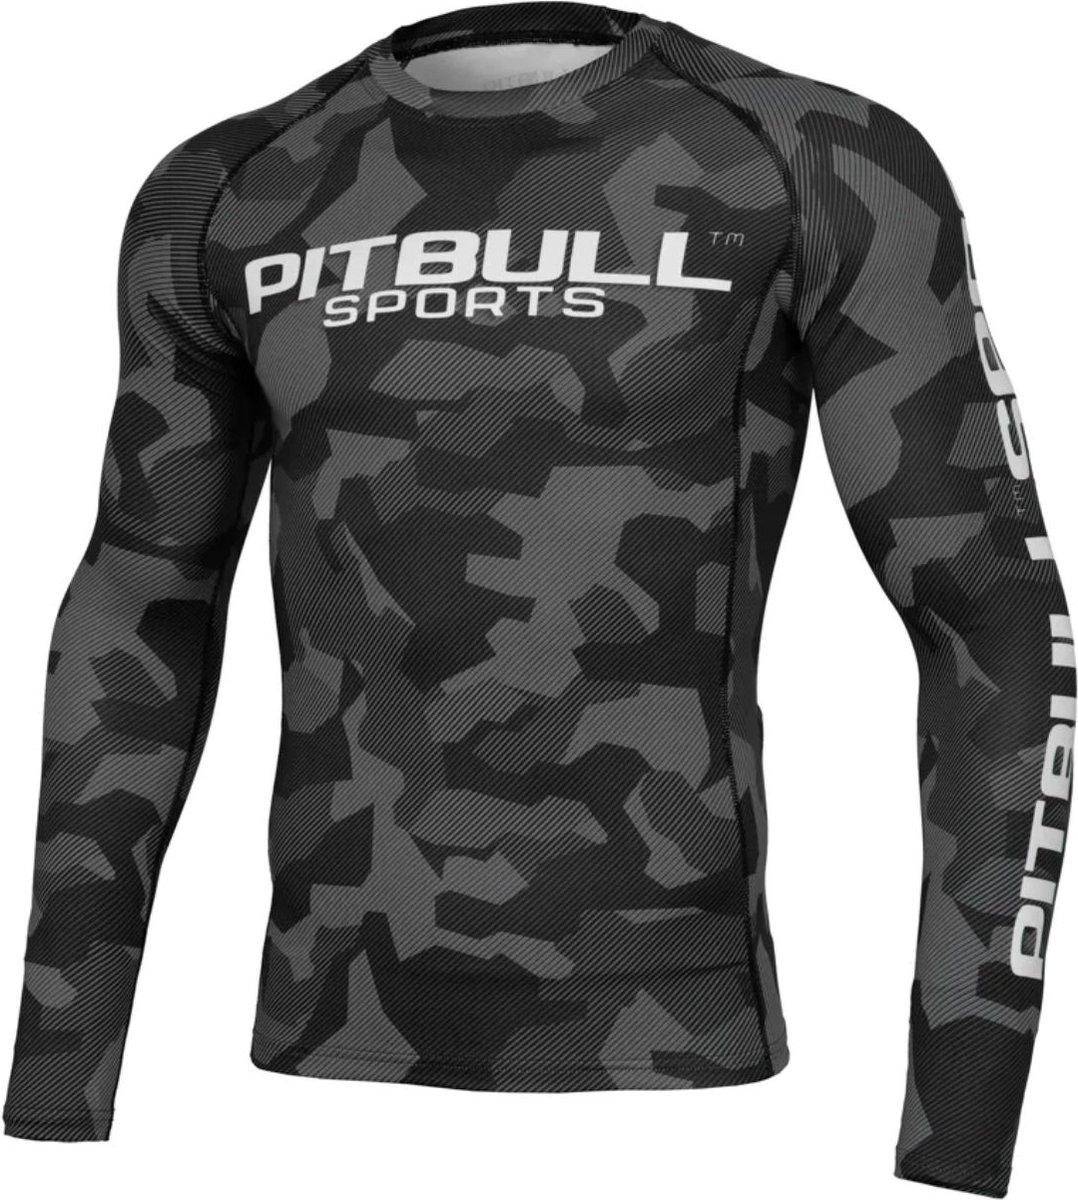 Pit Bull - Dillard Camo - Rashguard Long Sleeve - Compressie shirt lange mouwen - Grijs - Maat M